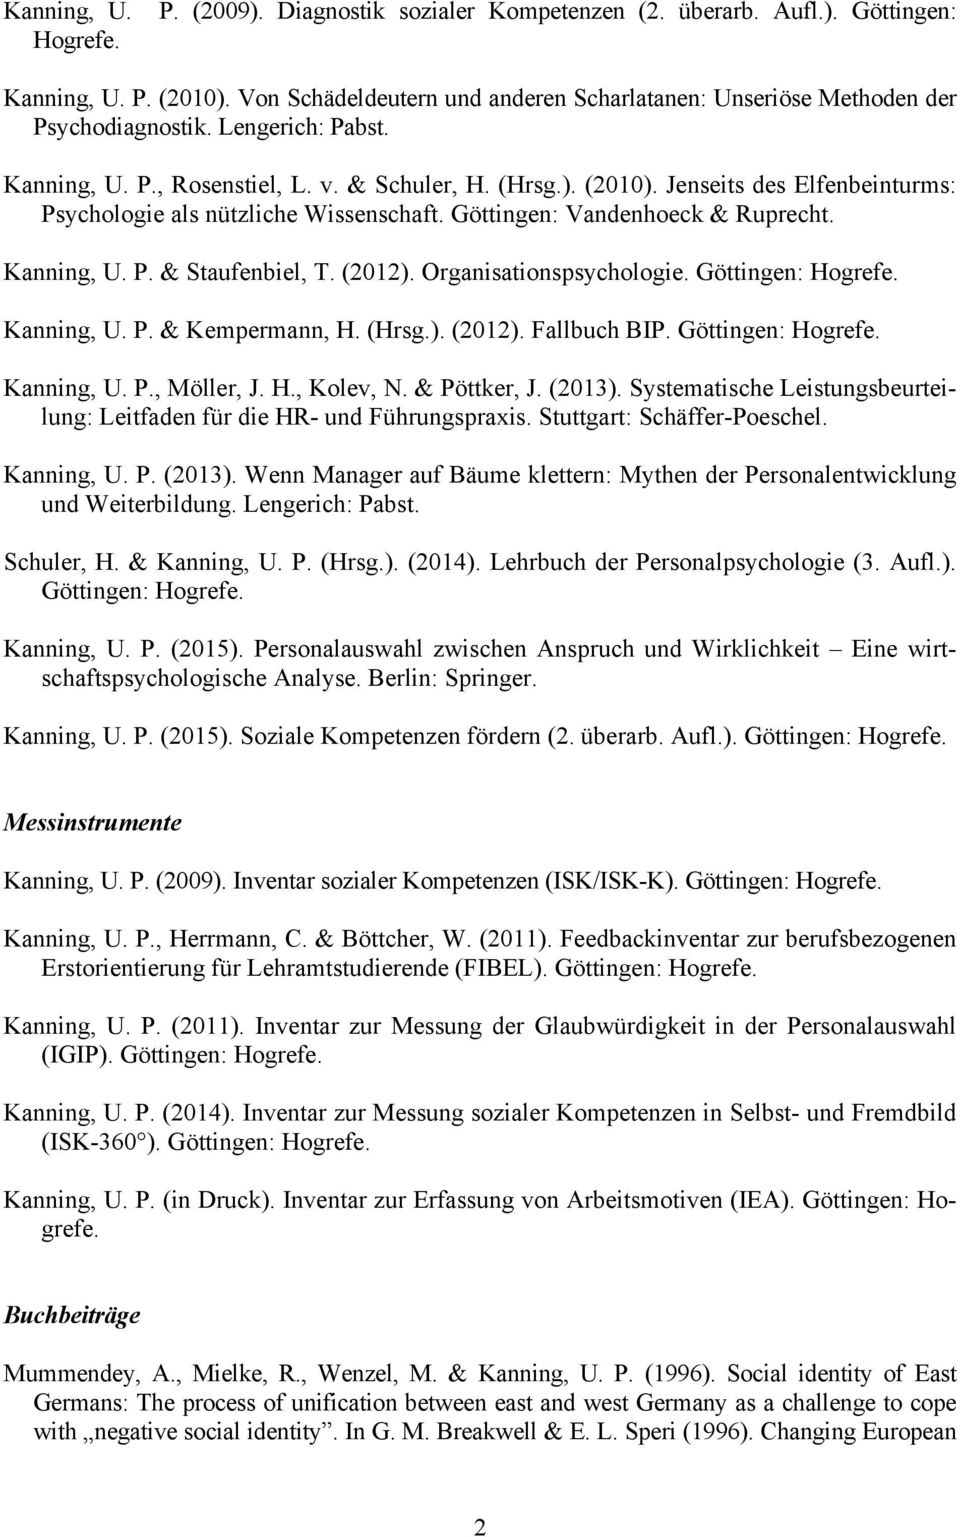 Jenseits des Elfenbeinturms: Psychologie als nützliche Wissenschaft. Göttingen: Vandenhoeck & Ruprecht. Kanning, U. P. & Staufenbiel, T. (2012). Organisationspsychologie. Göttingen: Hogrefe.